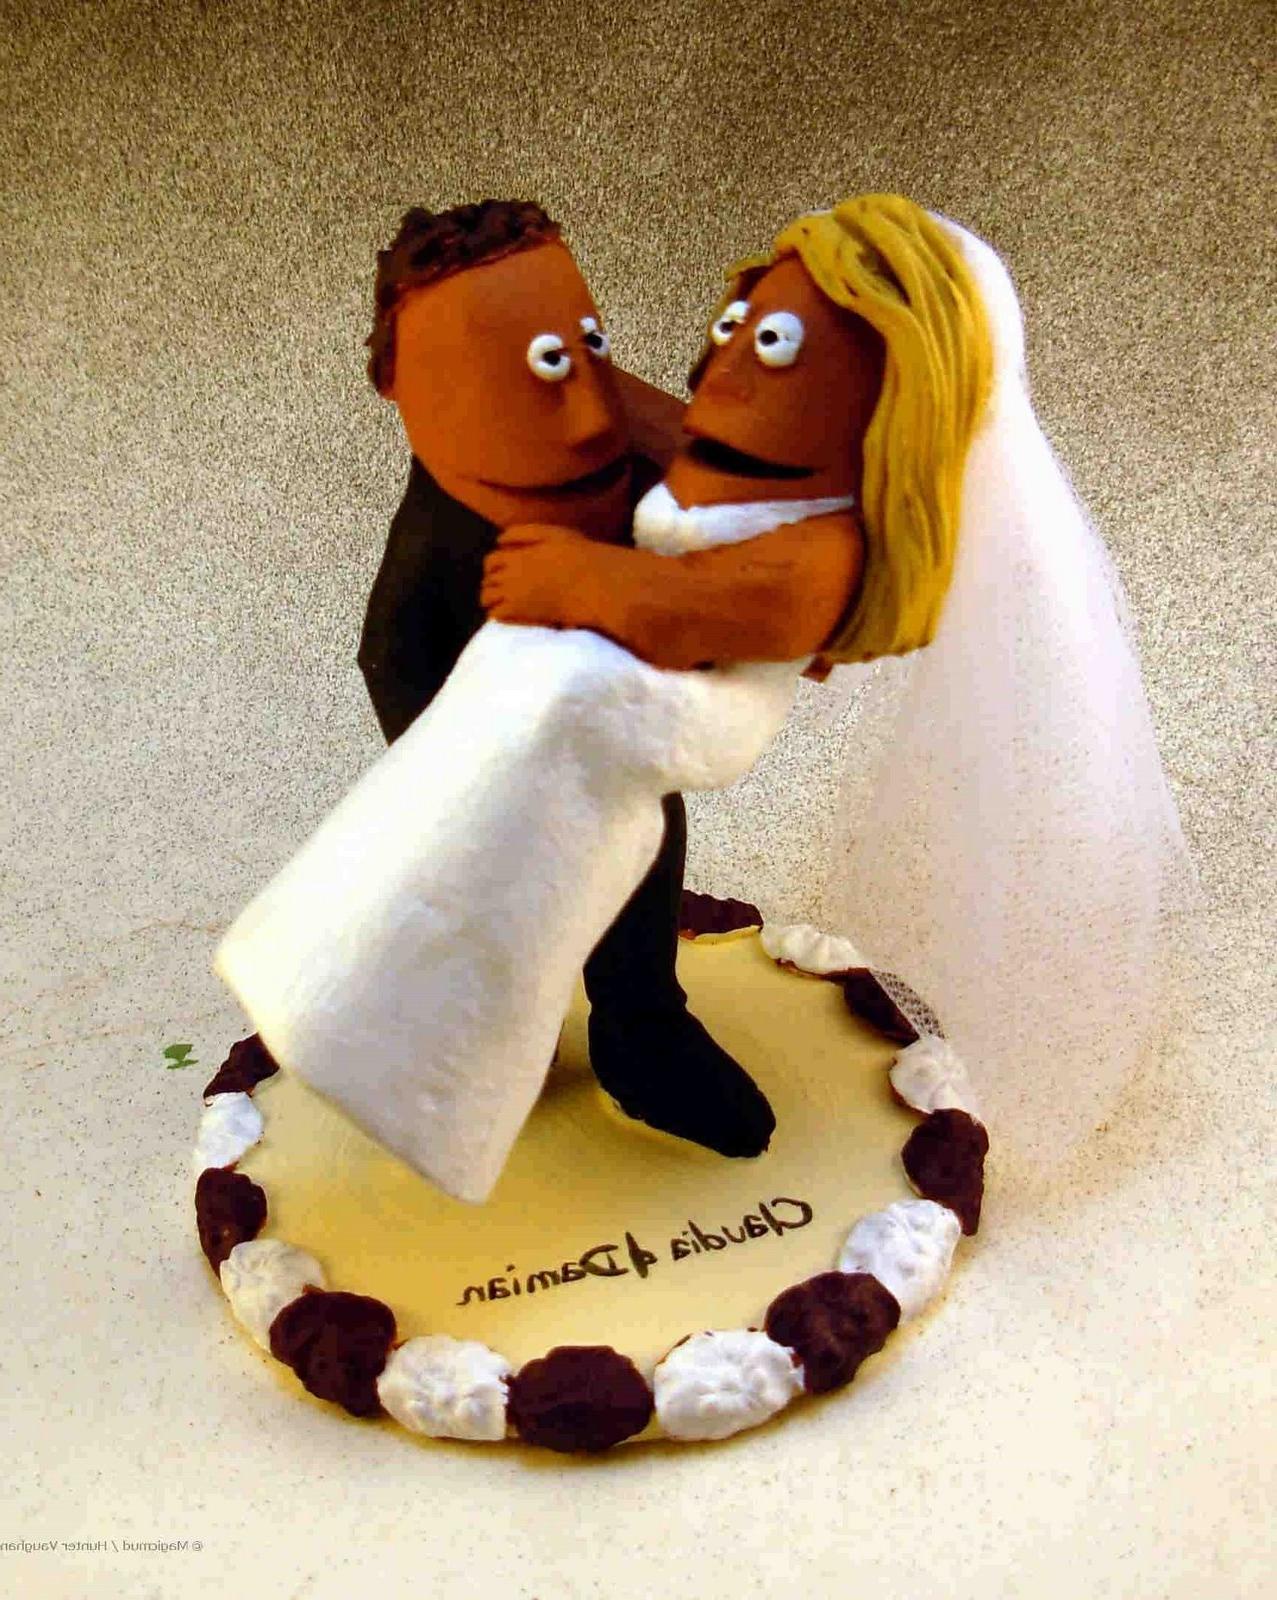 a new Wedding Cake Topper